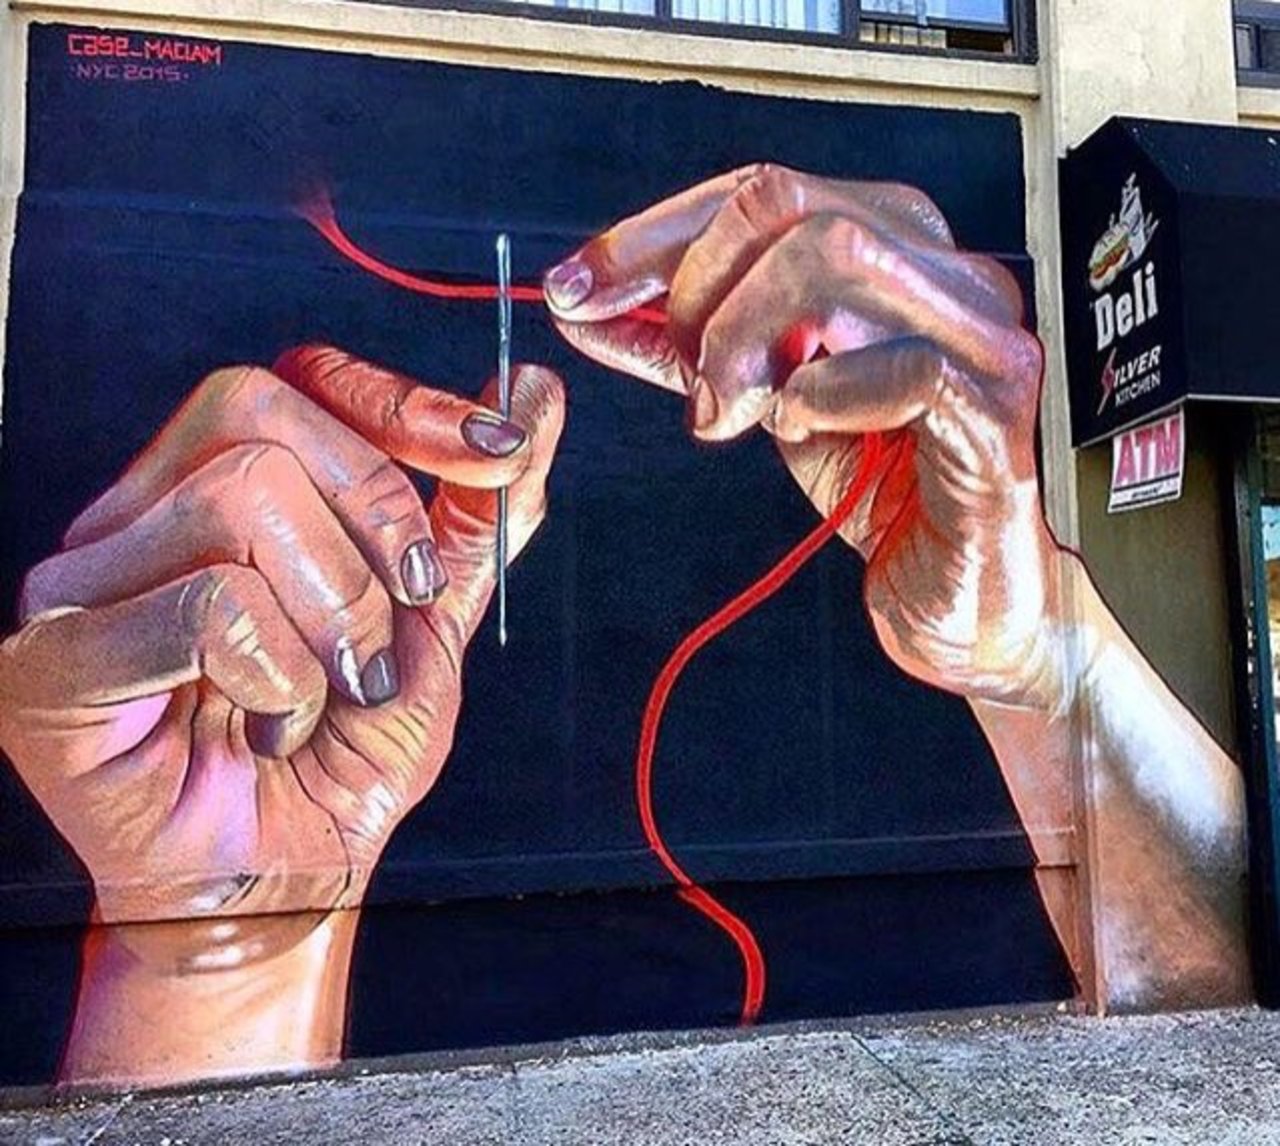 New Street Art by Case Ma'Claim in NYC 

#art #graffiti #mural #streetart https://t.co/eMW6mqyh5a